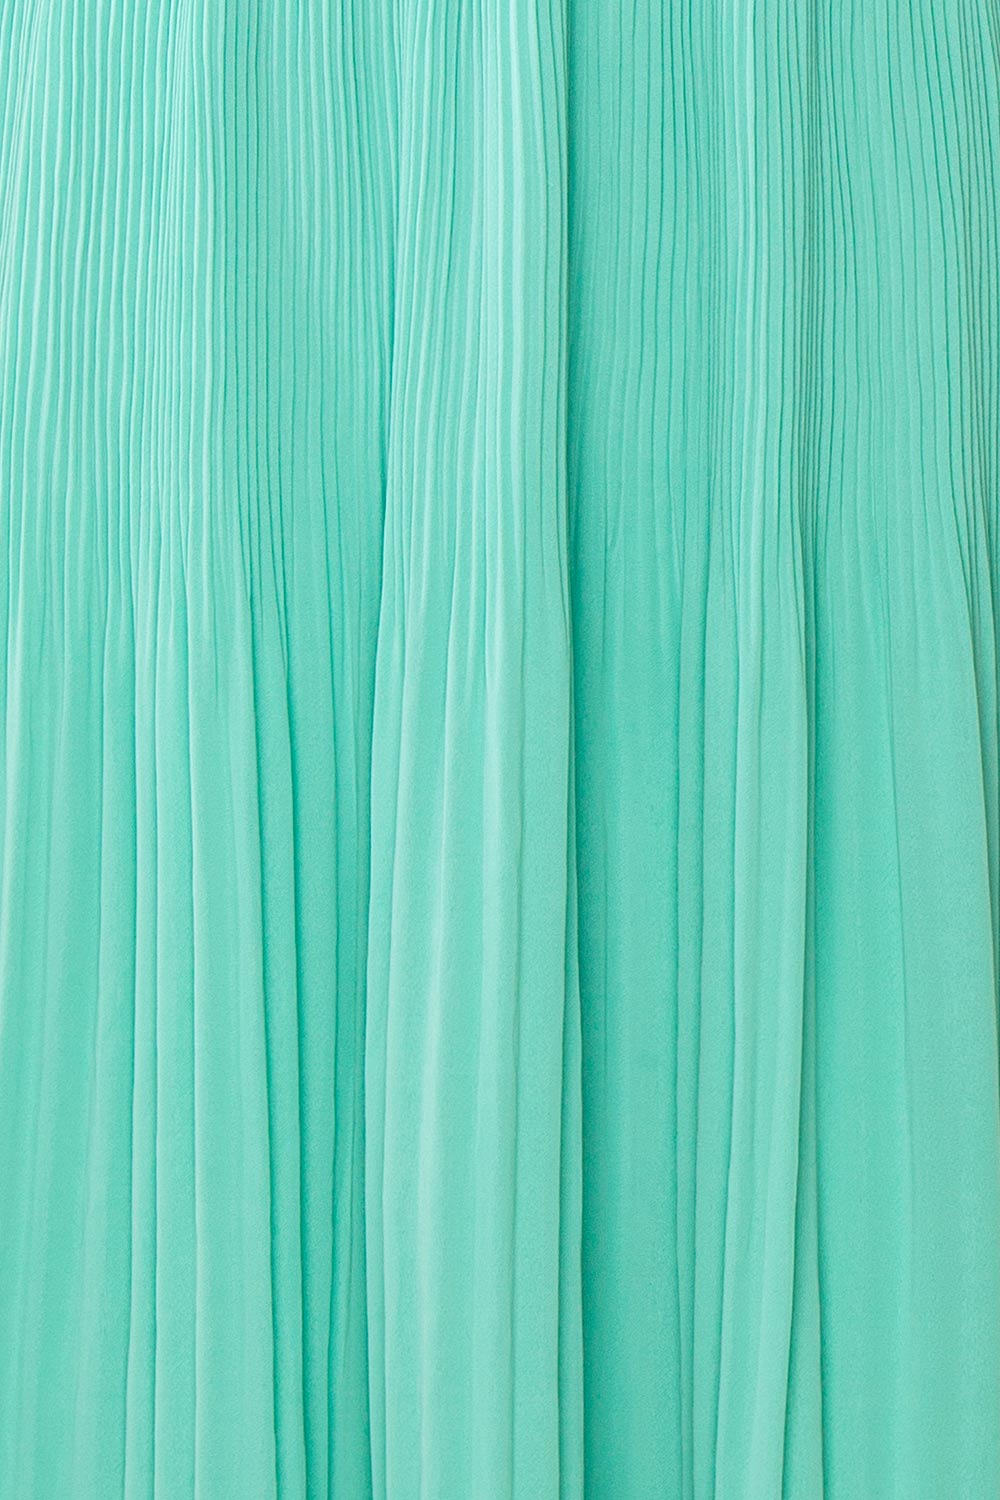 Dida Pleated Turquoise Midi Dress | Boutique 1861 fabric 